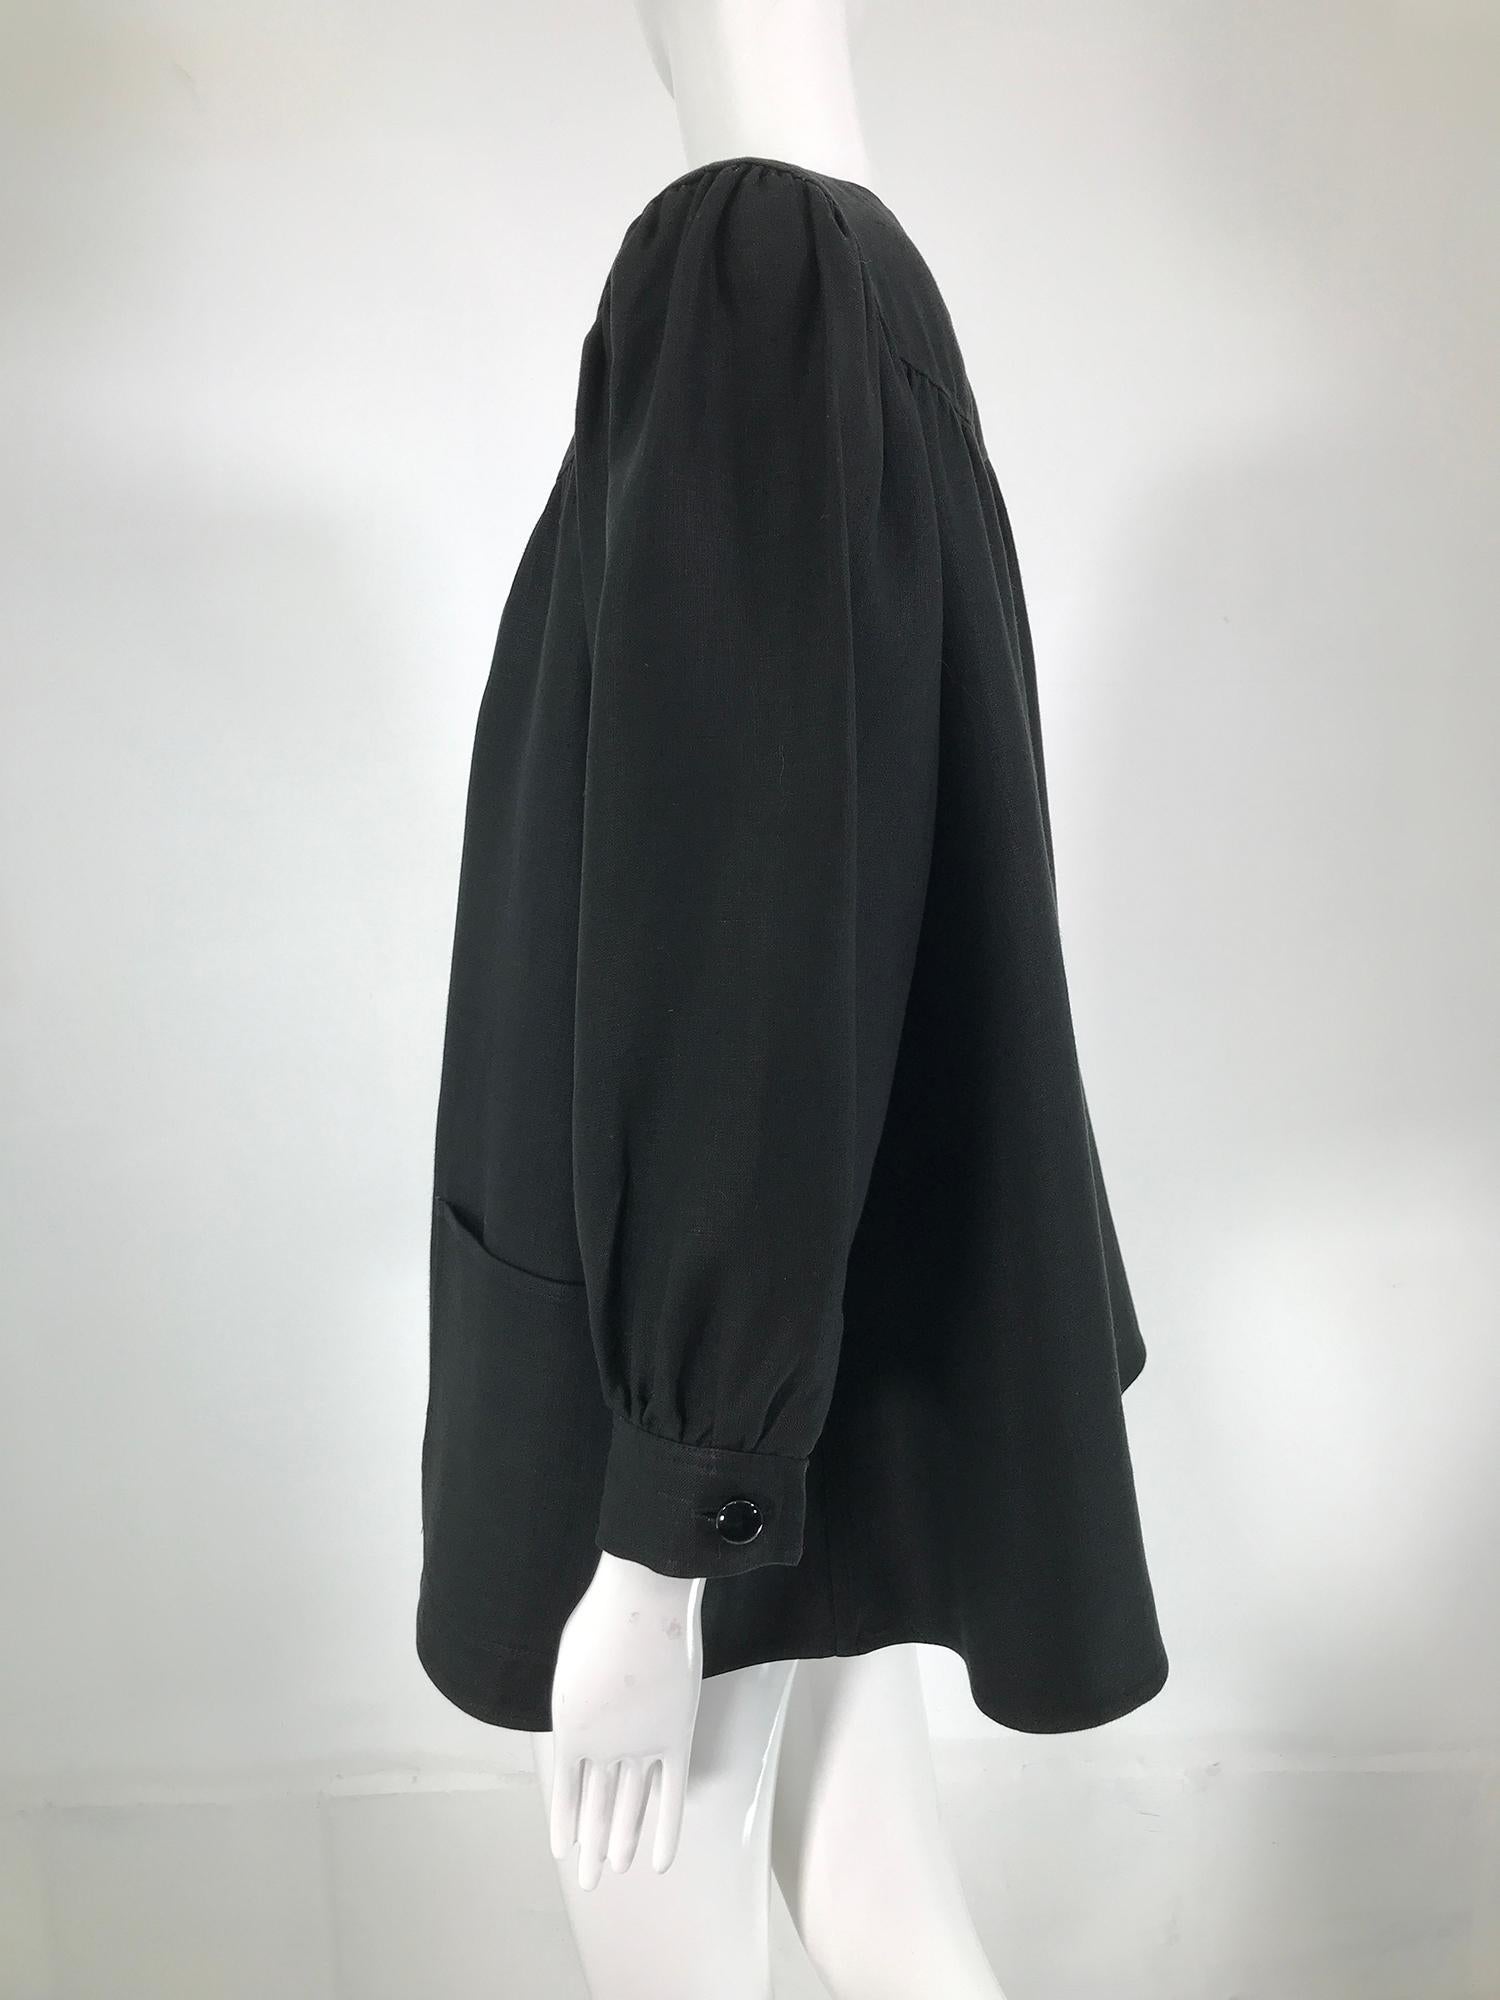 Oscar de la Renta Black Linen Button Front Full Sleeve Hip Pocket Jacket 1980s For Sale 9